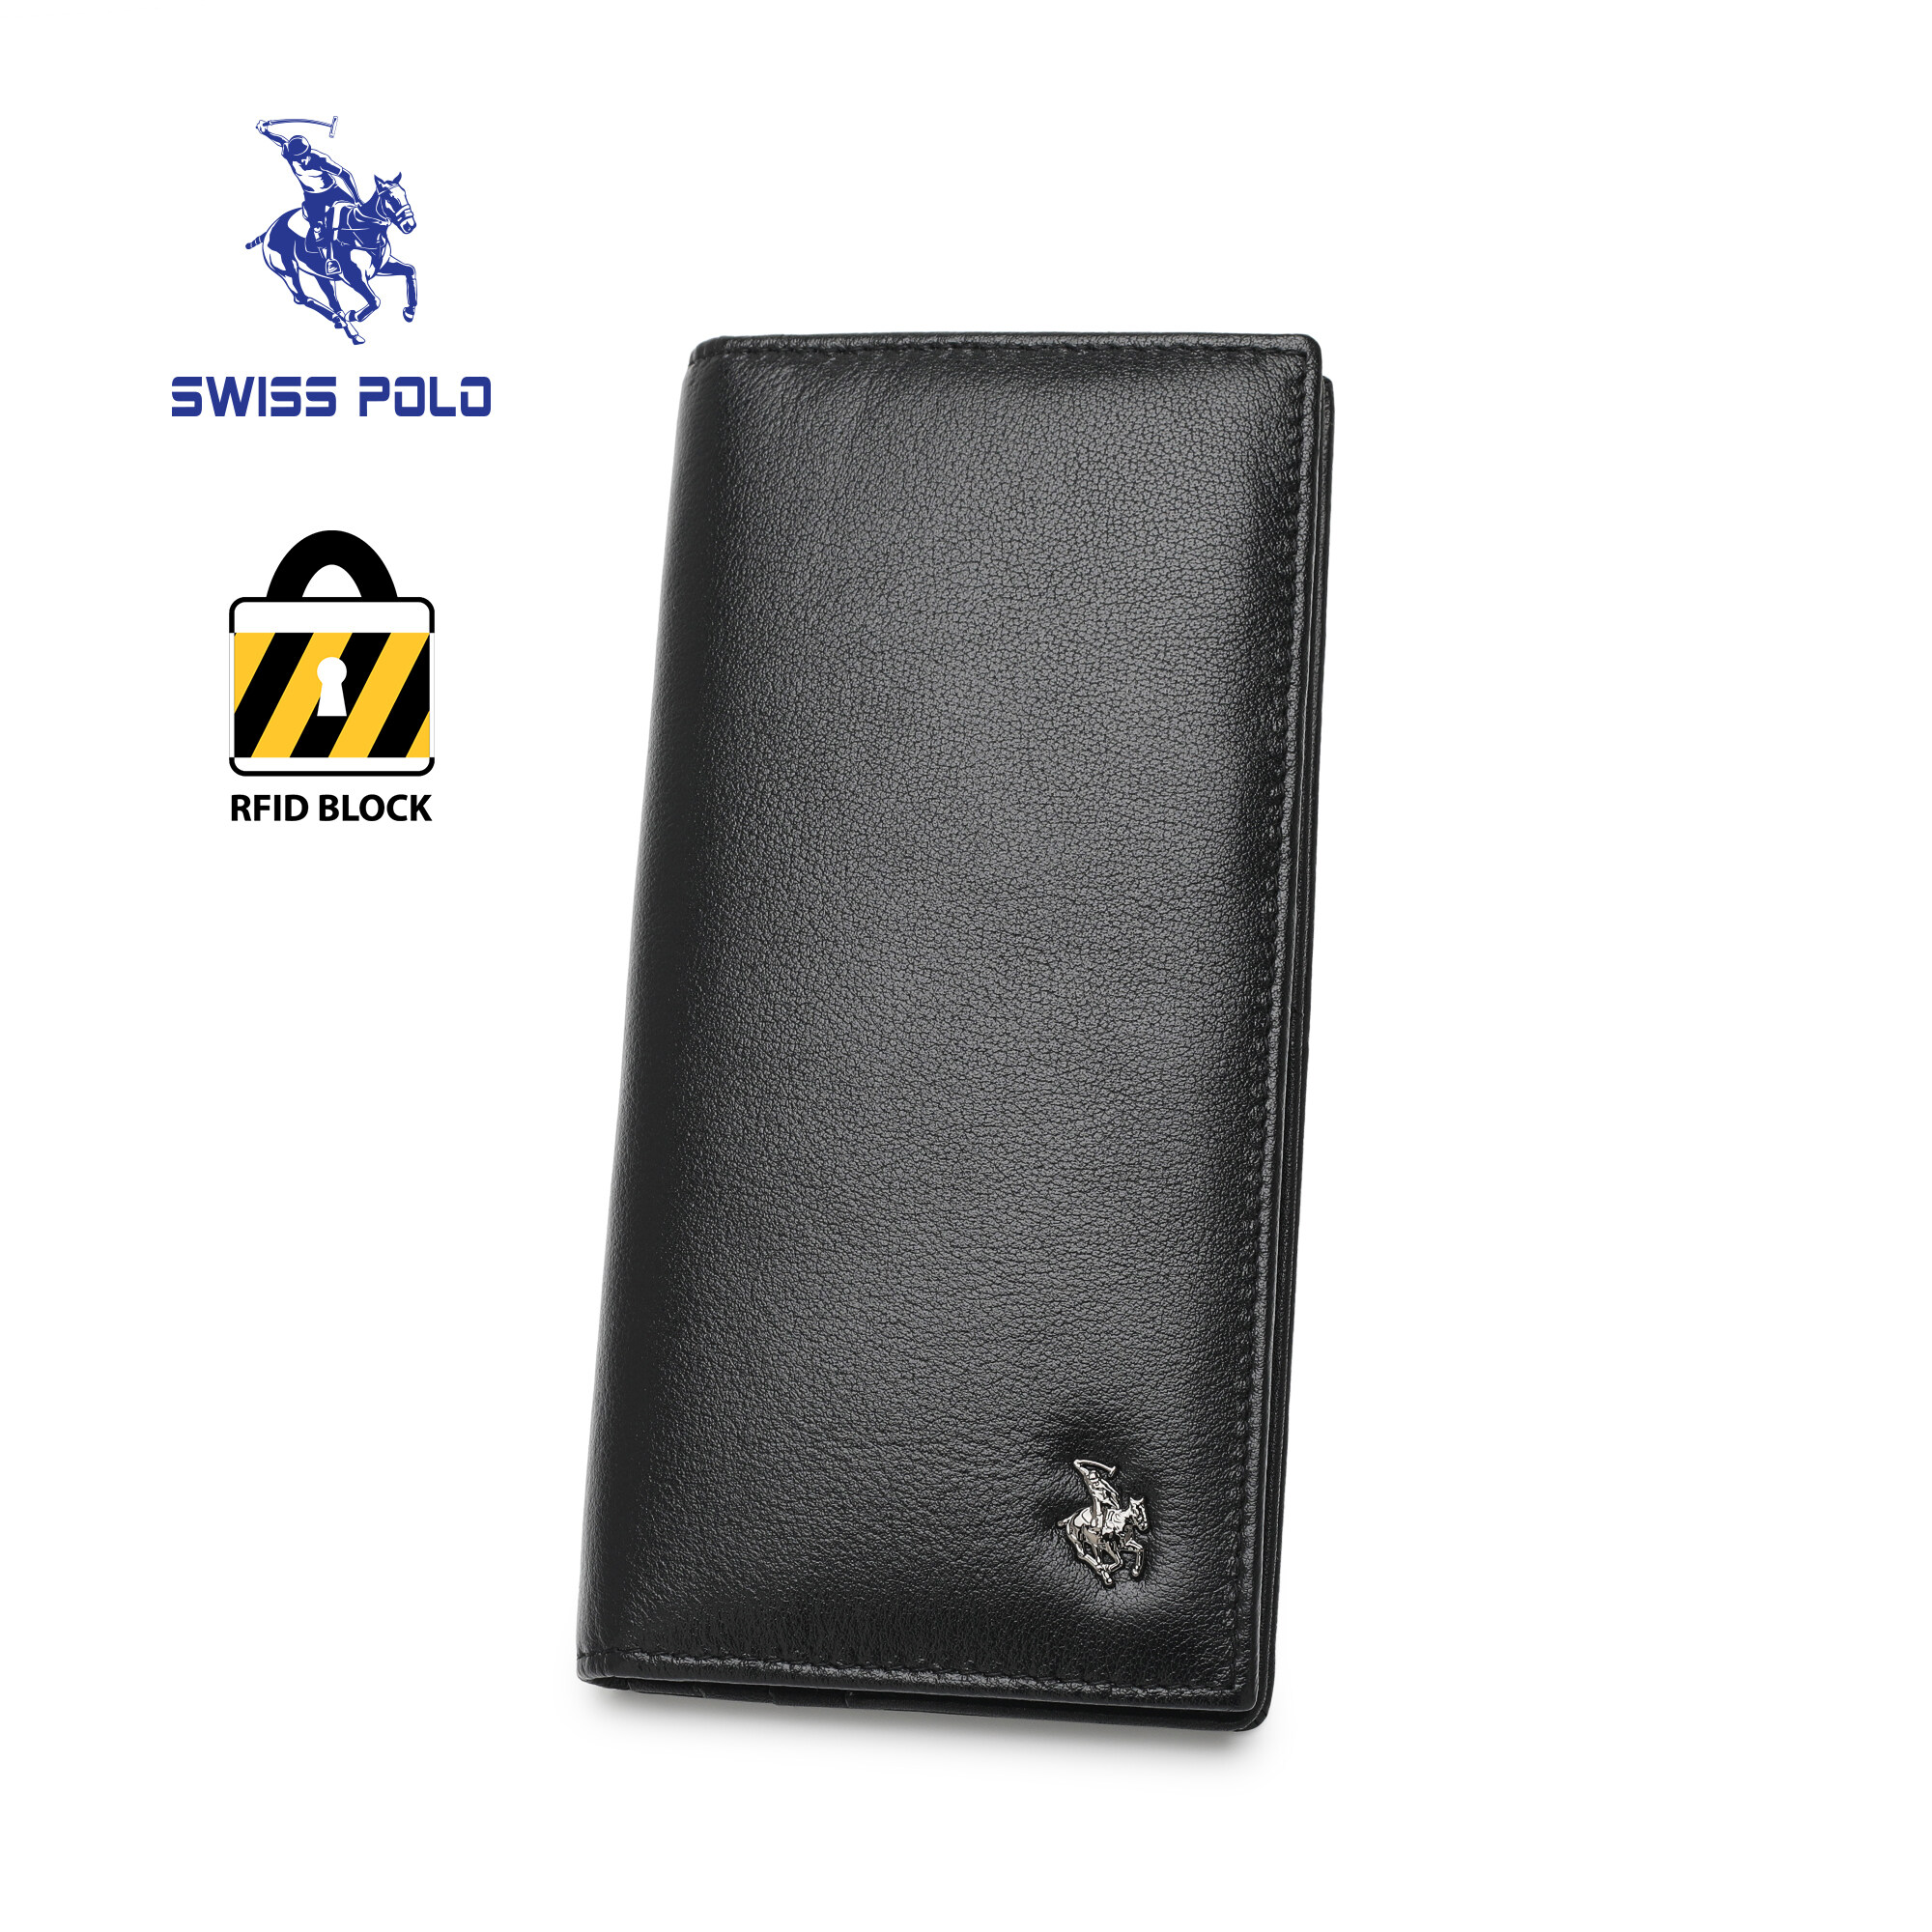 SWISS POLO Genuine Leather RFID Long Wallet SW 167-1 BLACK